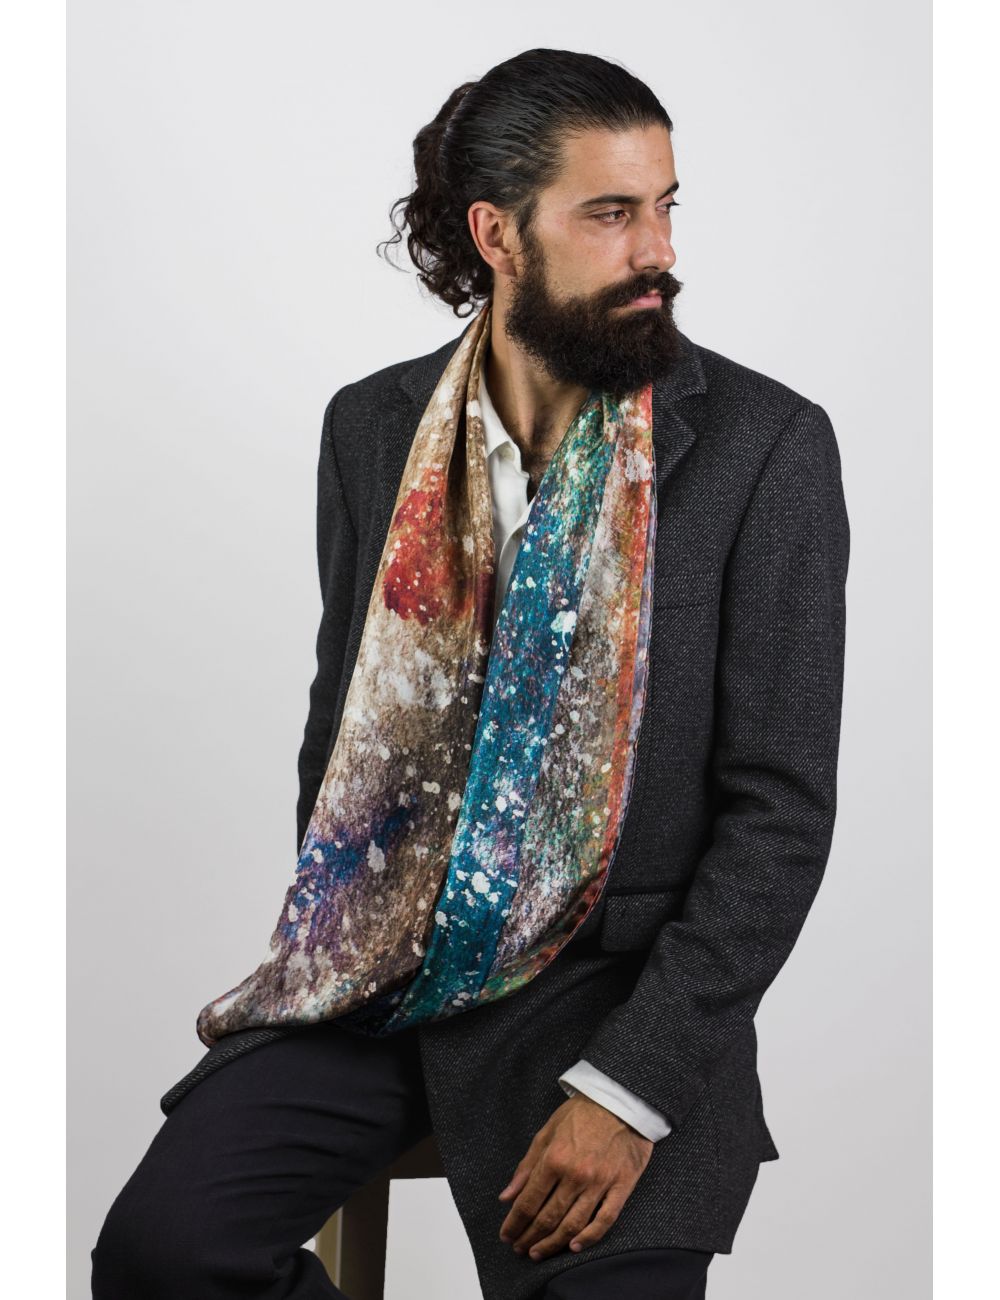 No more ties! Elegant man silk scarf